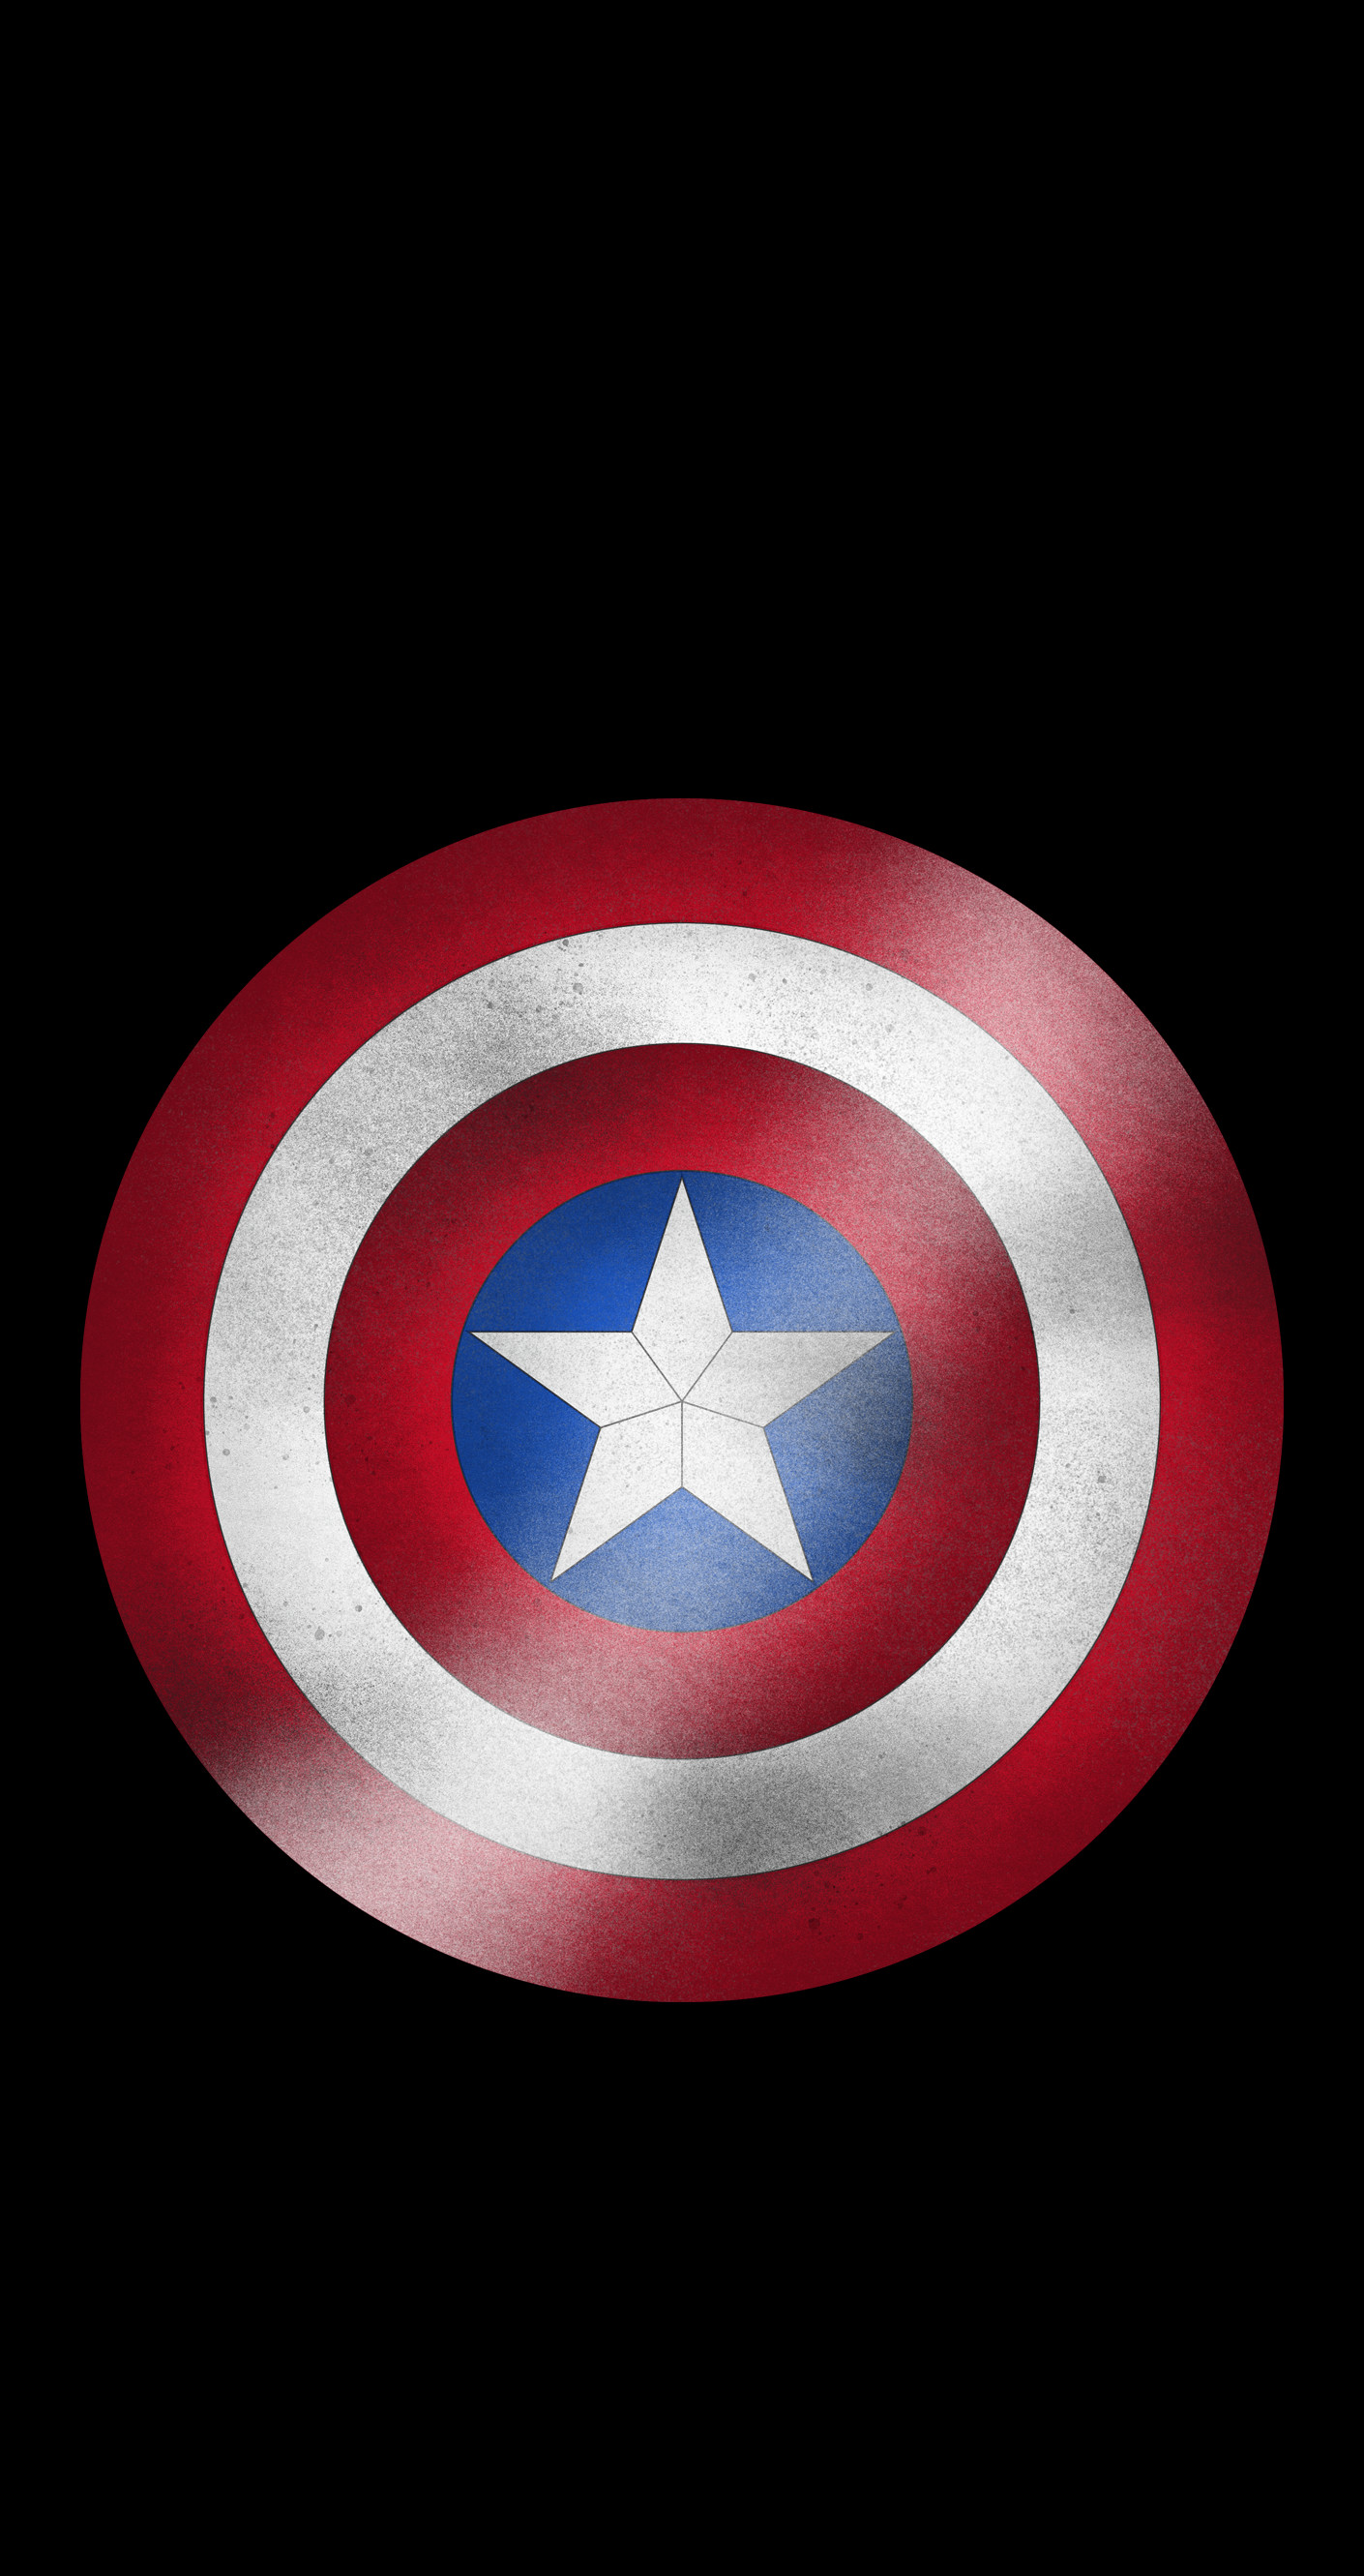 1410x2662 Captain America iPhone wallpaper Captain America Wallpaper, Marvel  Avengers, Iphone Wallpapers, Backgrounds,